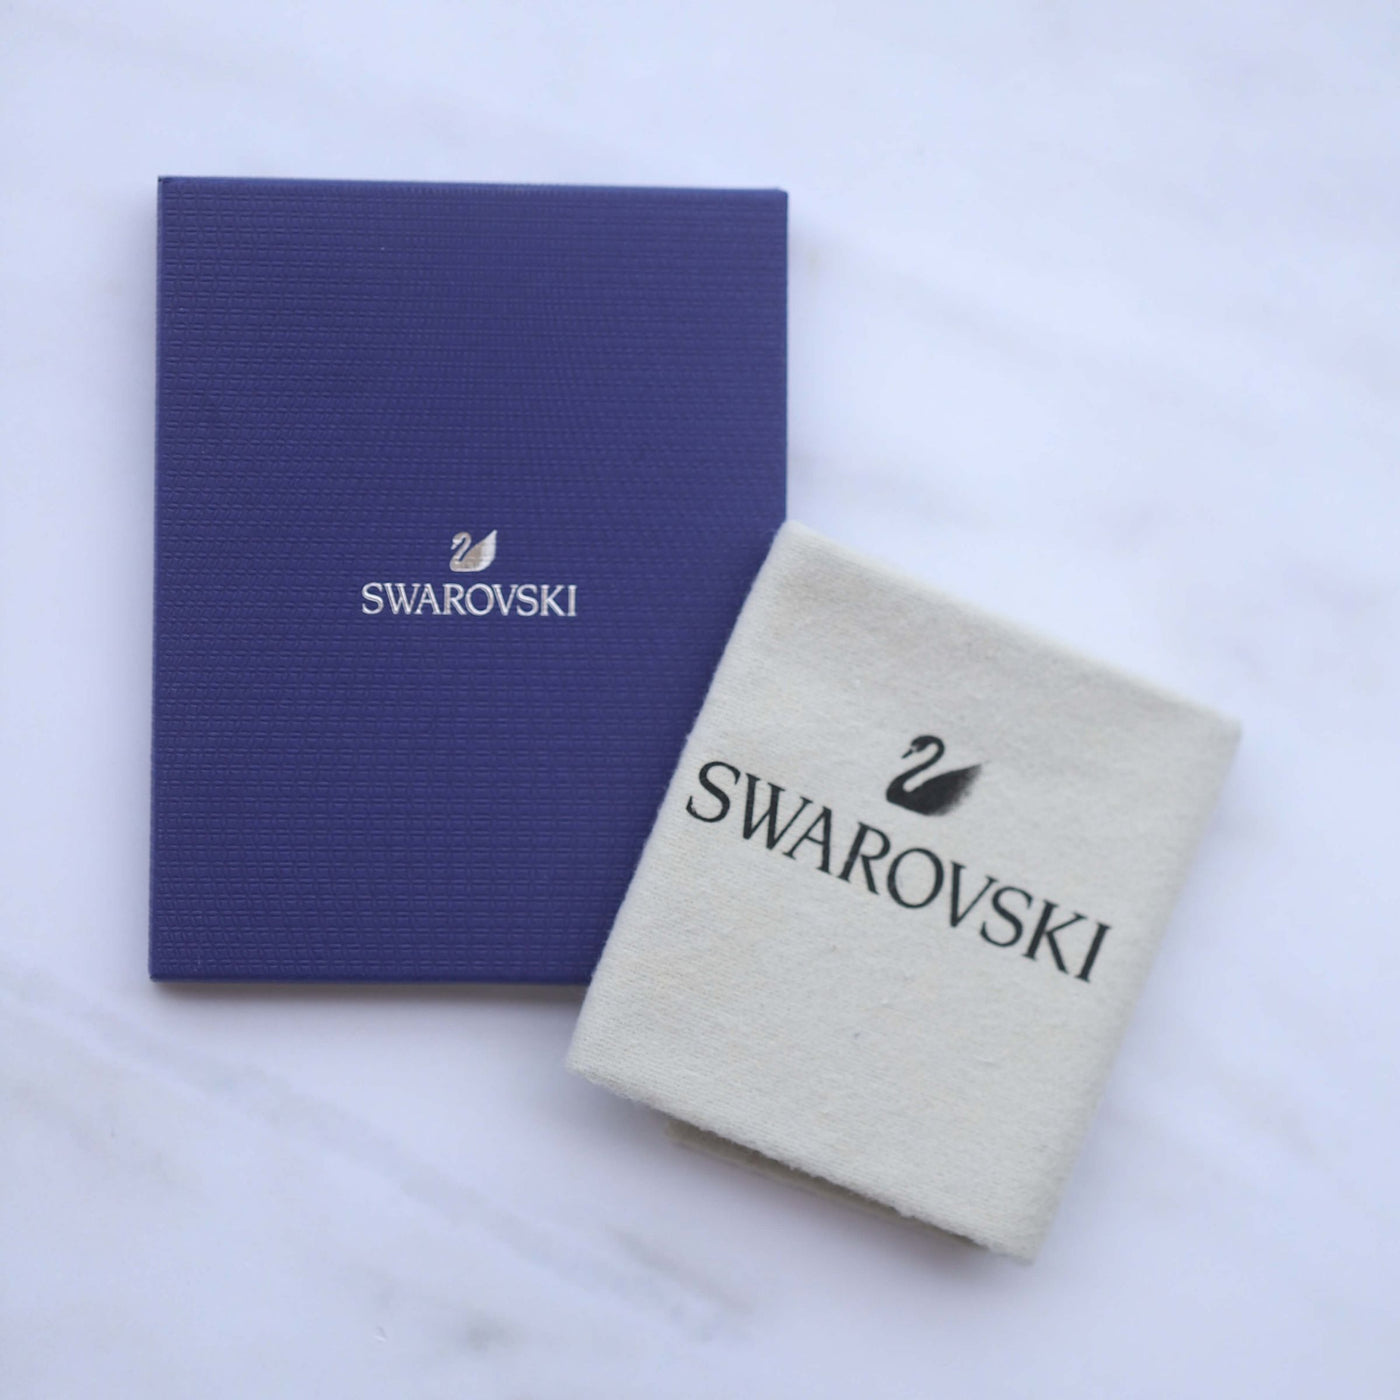 SWAROVSKI מטלית ניקוי מיוחדת לתכשיטים בציפוי רודיום של סברובסקי